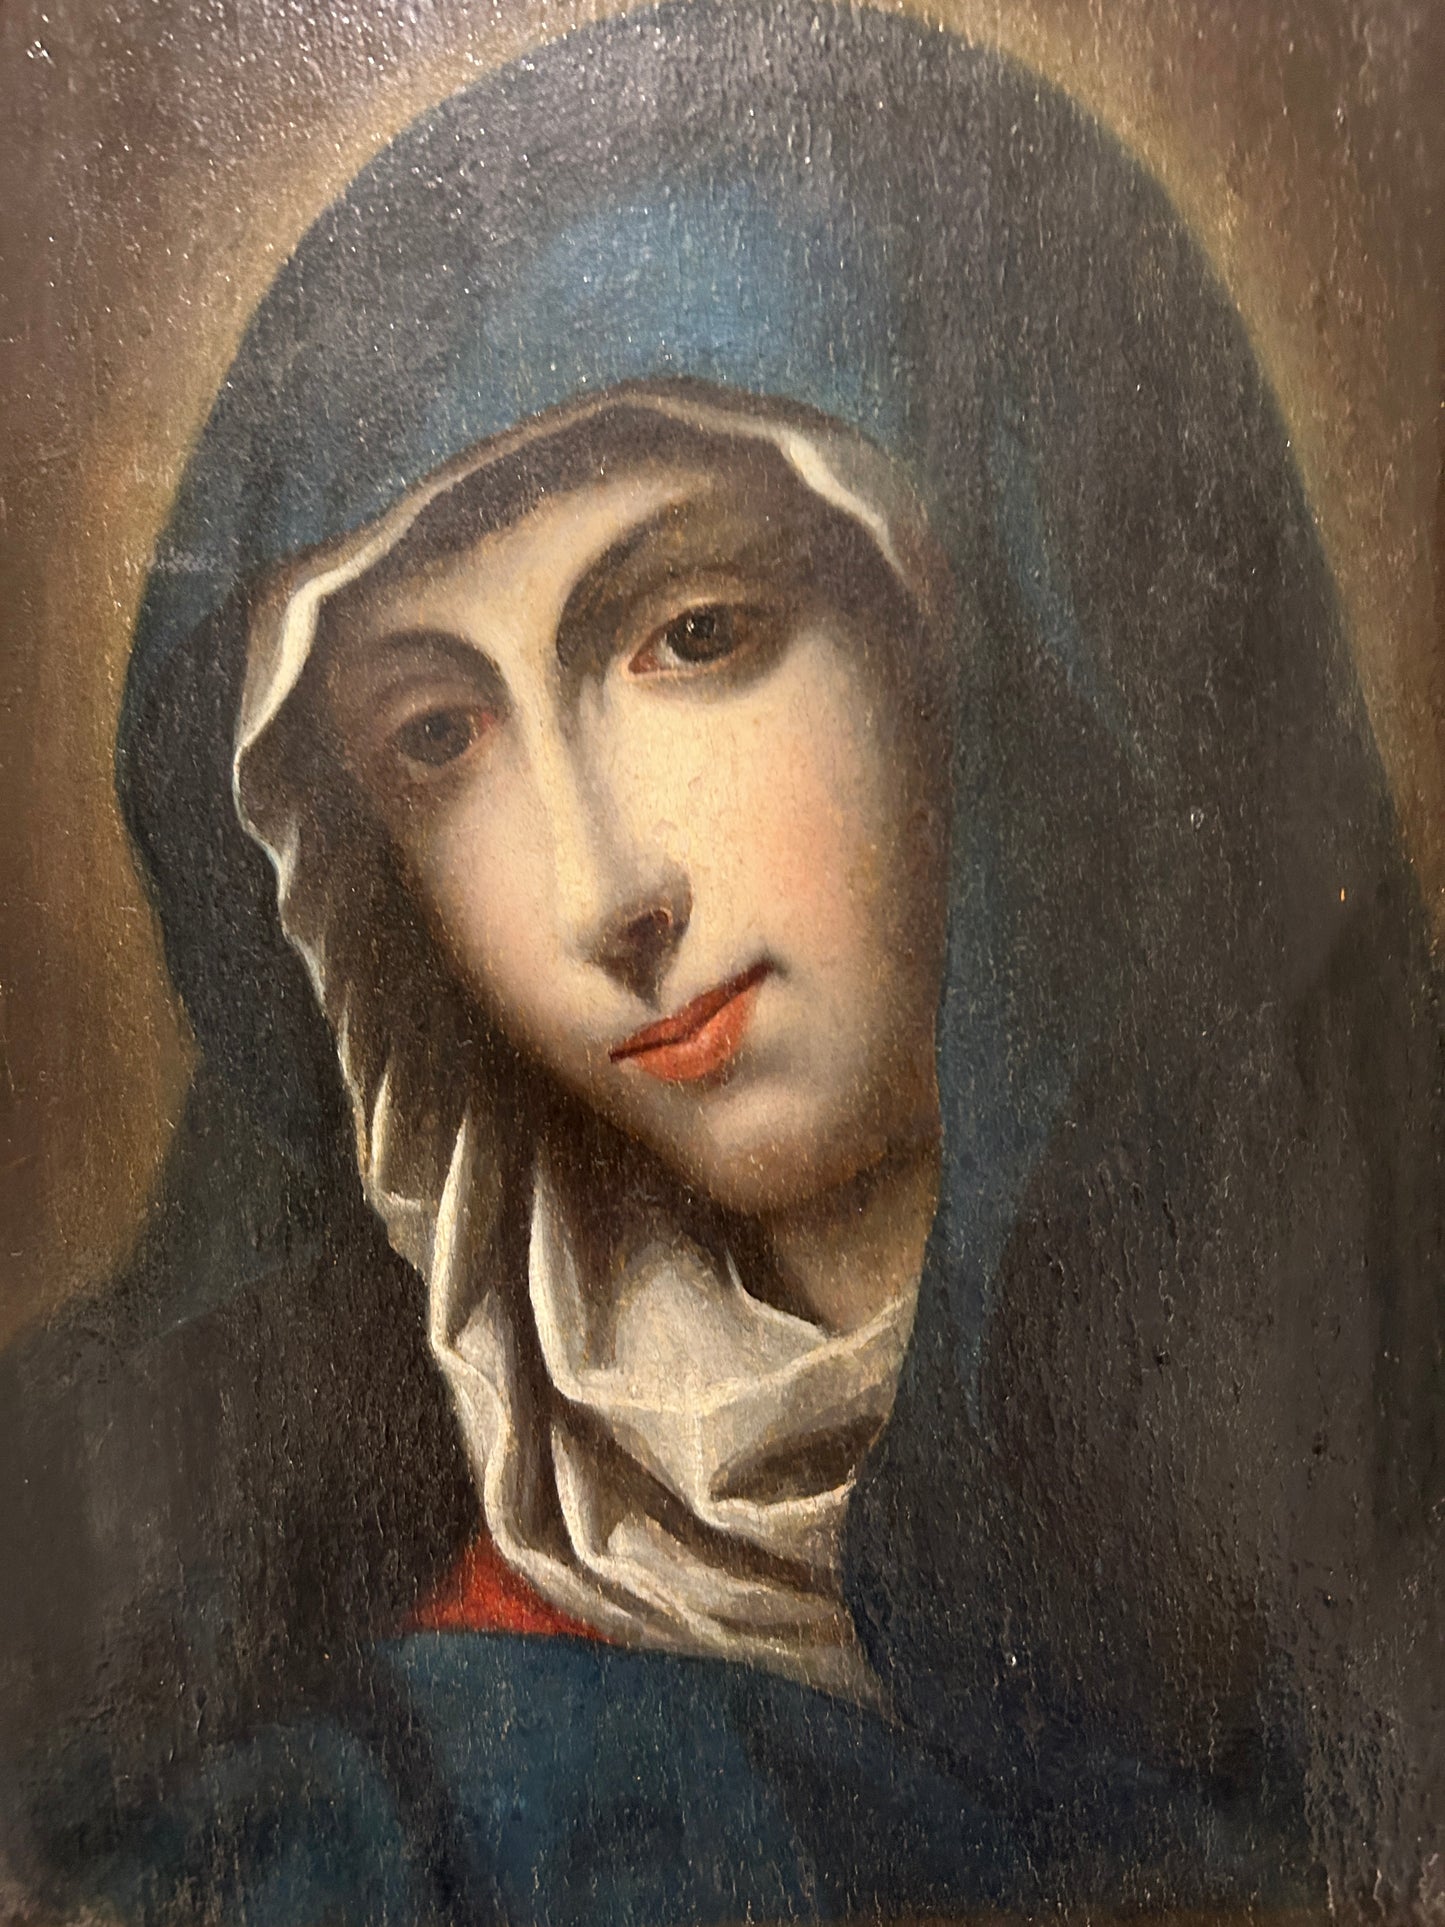 The Virgin Mary  Oil on Panel (18th century or earlier)